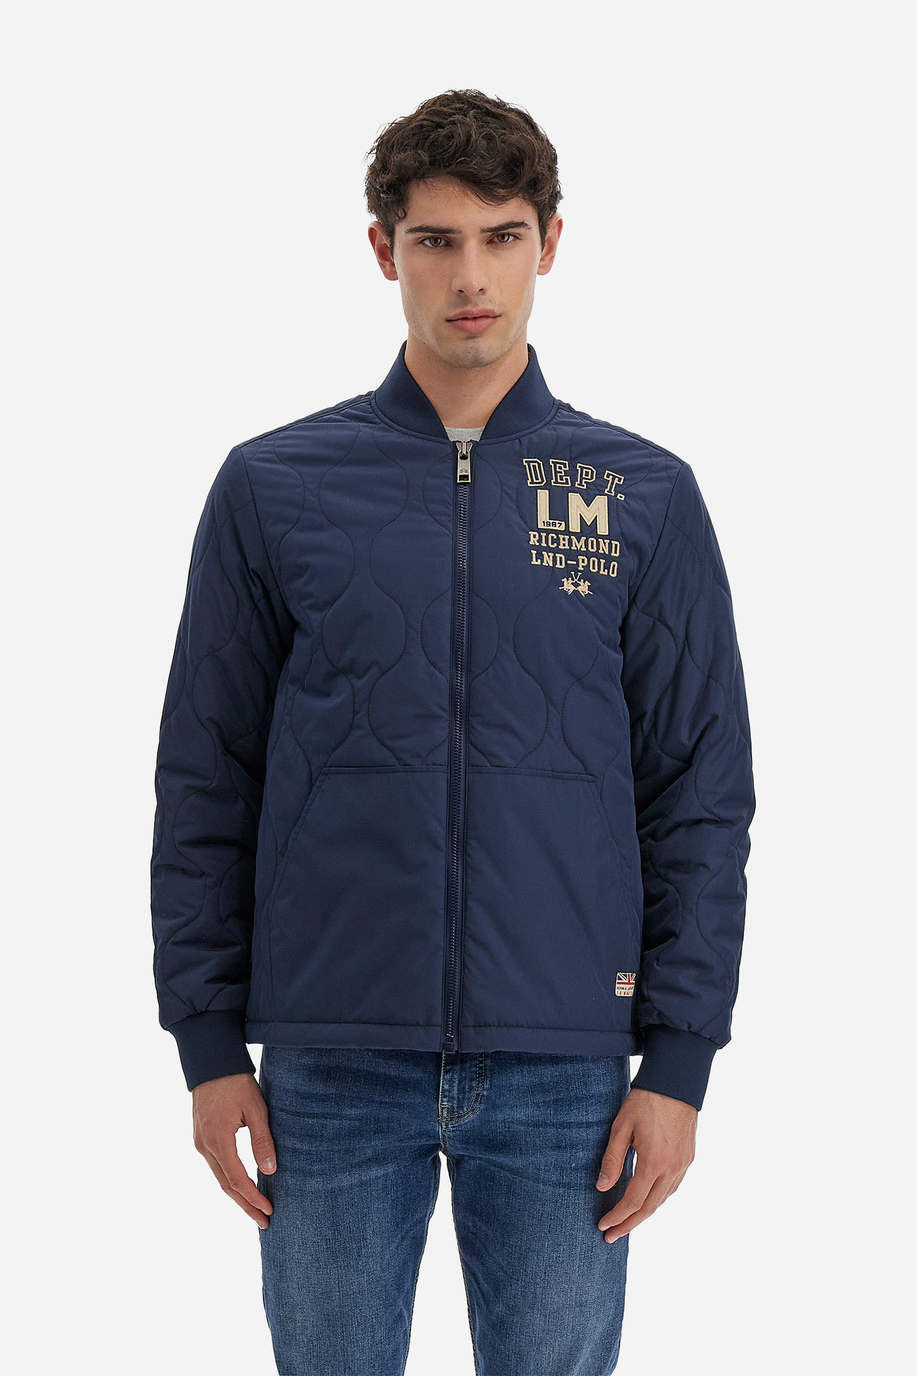 Polo Academy men's solid color high neck full zip jacket with hidden pockets - Vanni - Spring jackets | La Martina - Official Online Shop